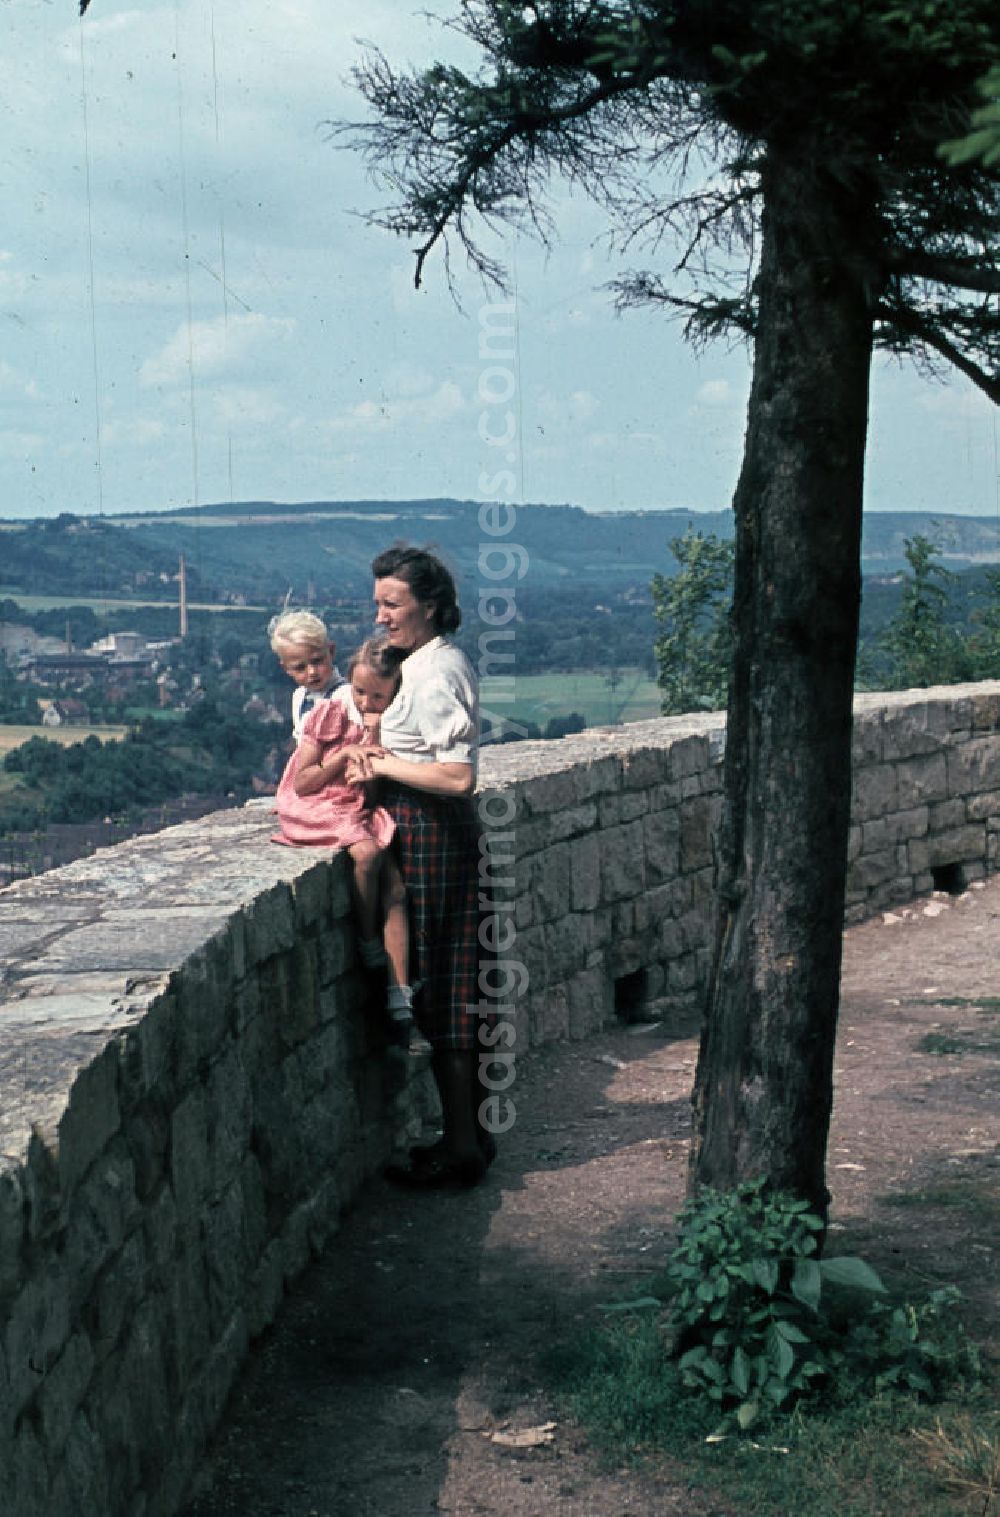 GDR picture archive: Bad Kösen - Familienausflug auf der Rudelsburg. Familytrip to the castle Rudelsburg.